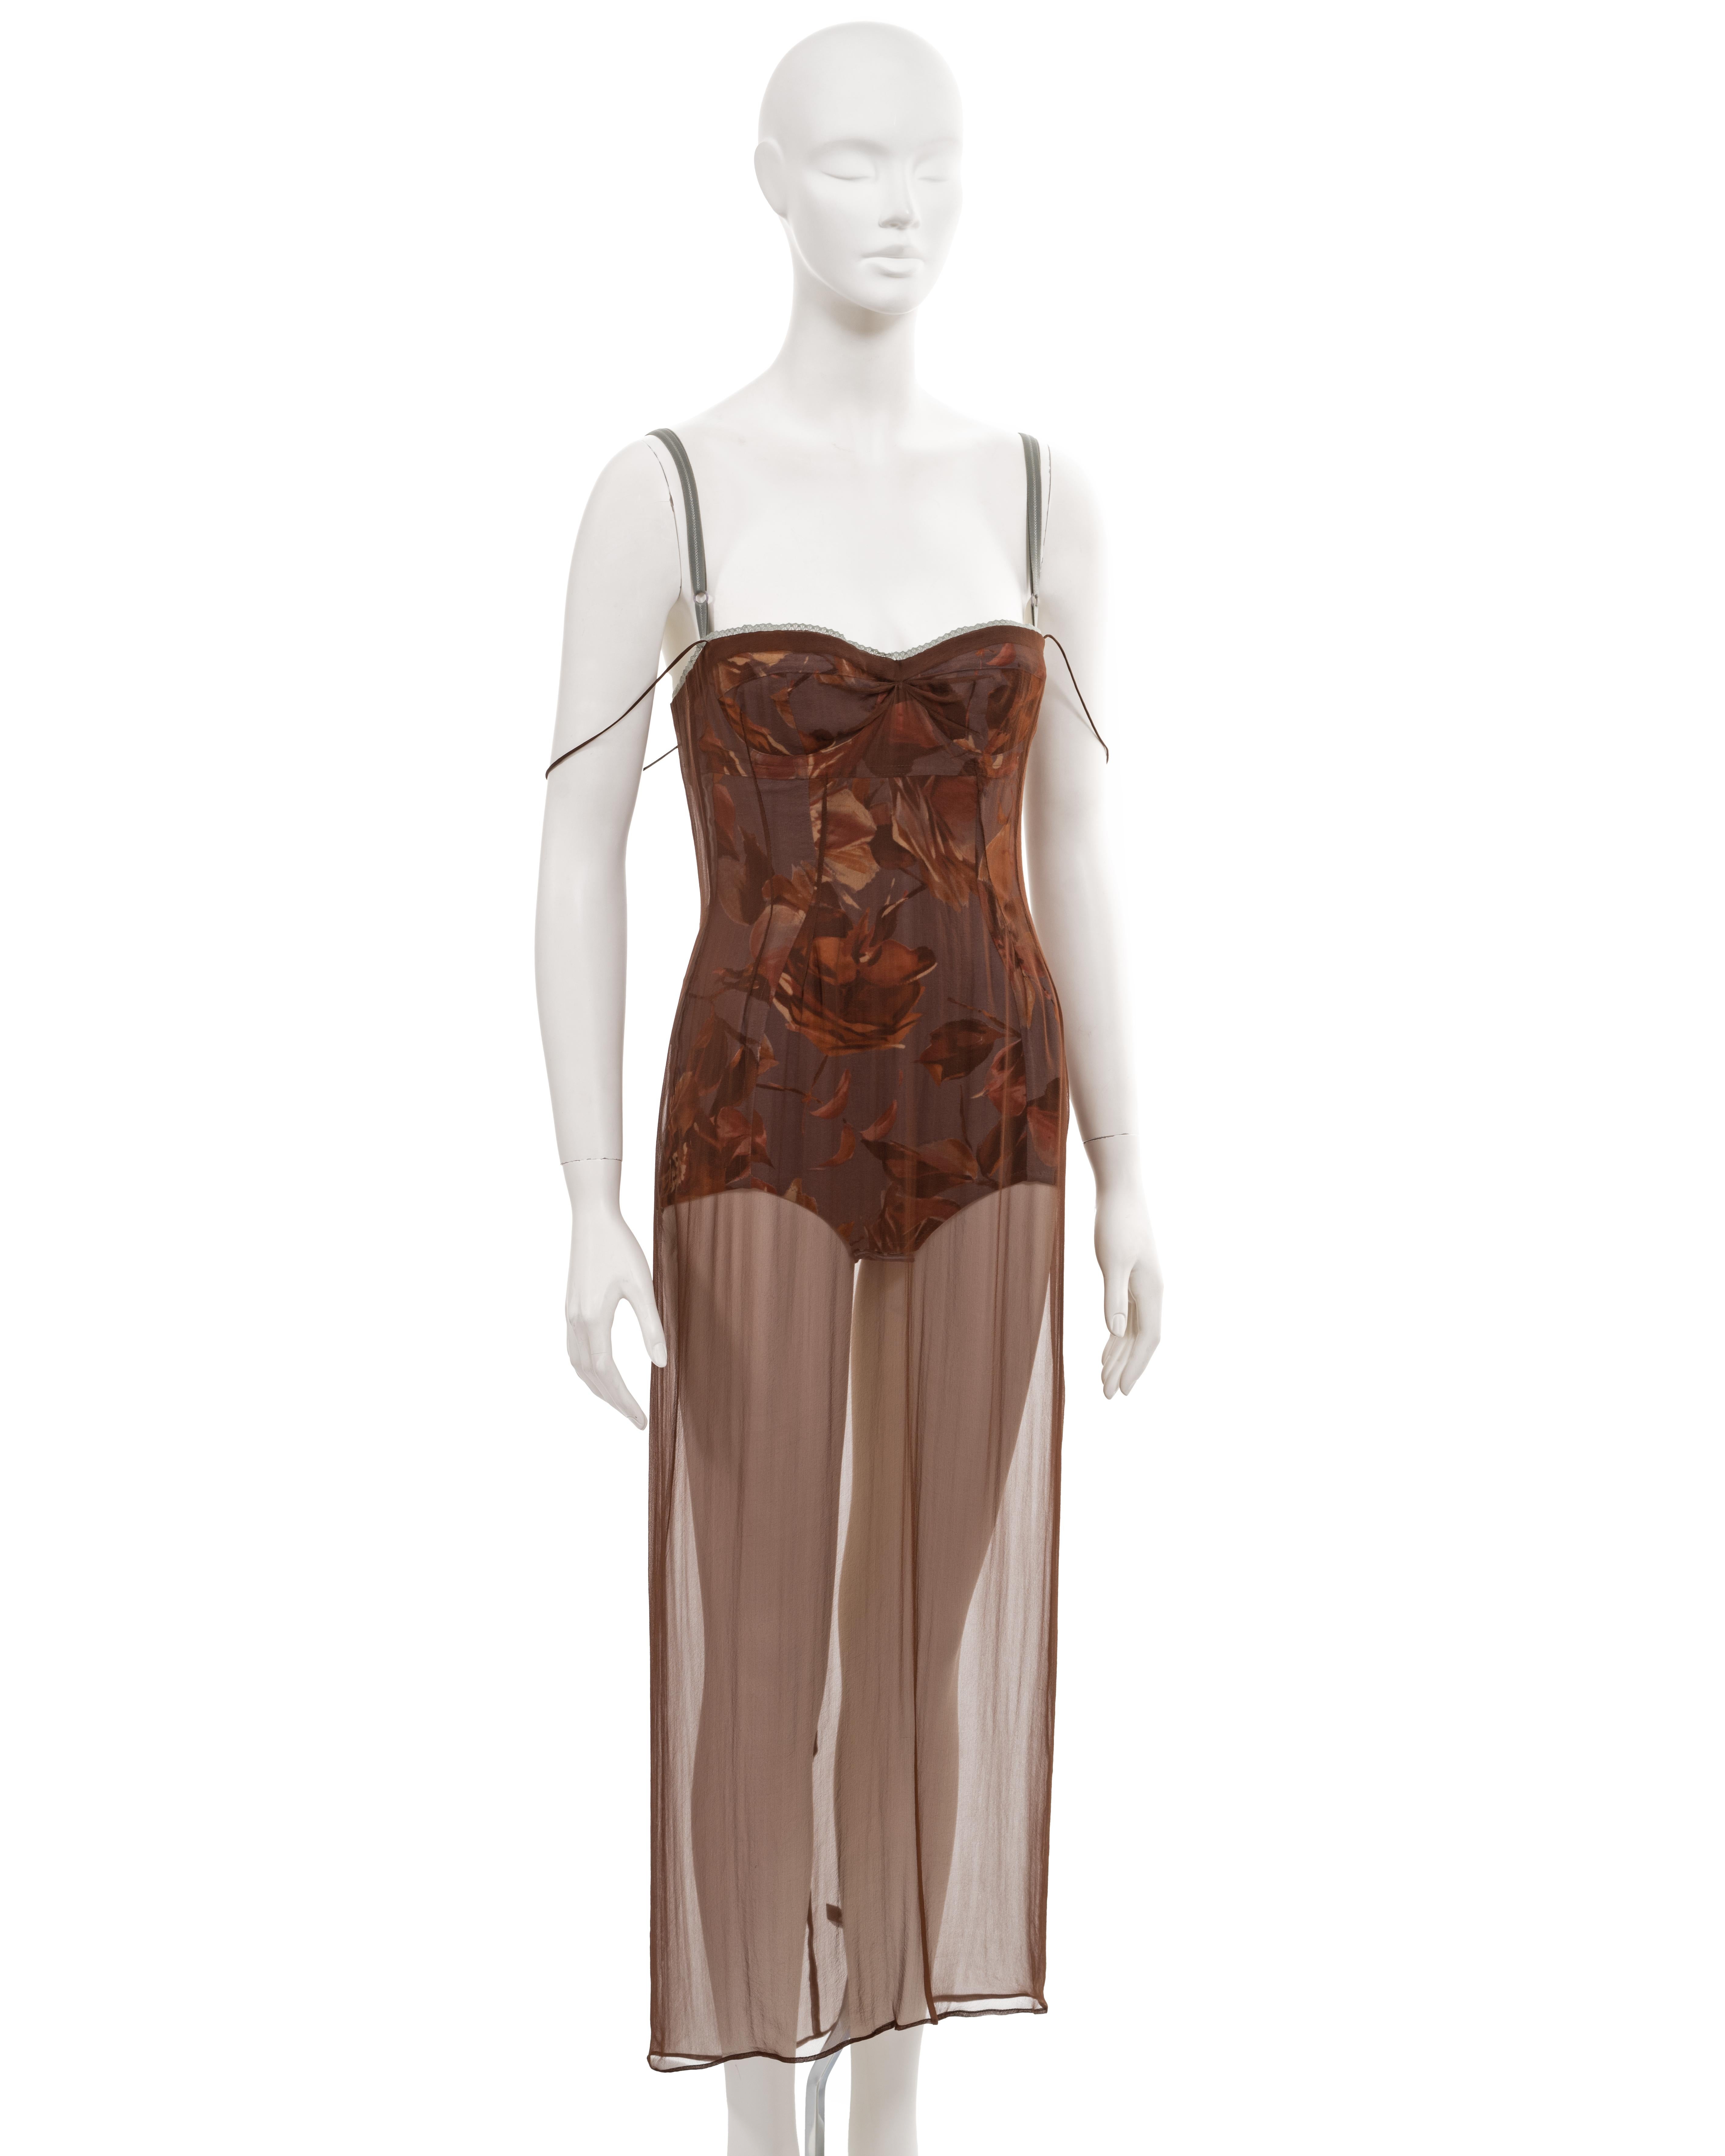 Dolce & Gabbana brown silk chiffon evening dress with built-in bodysuit, ss 1997 9